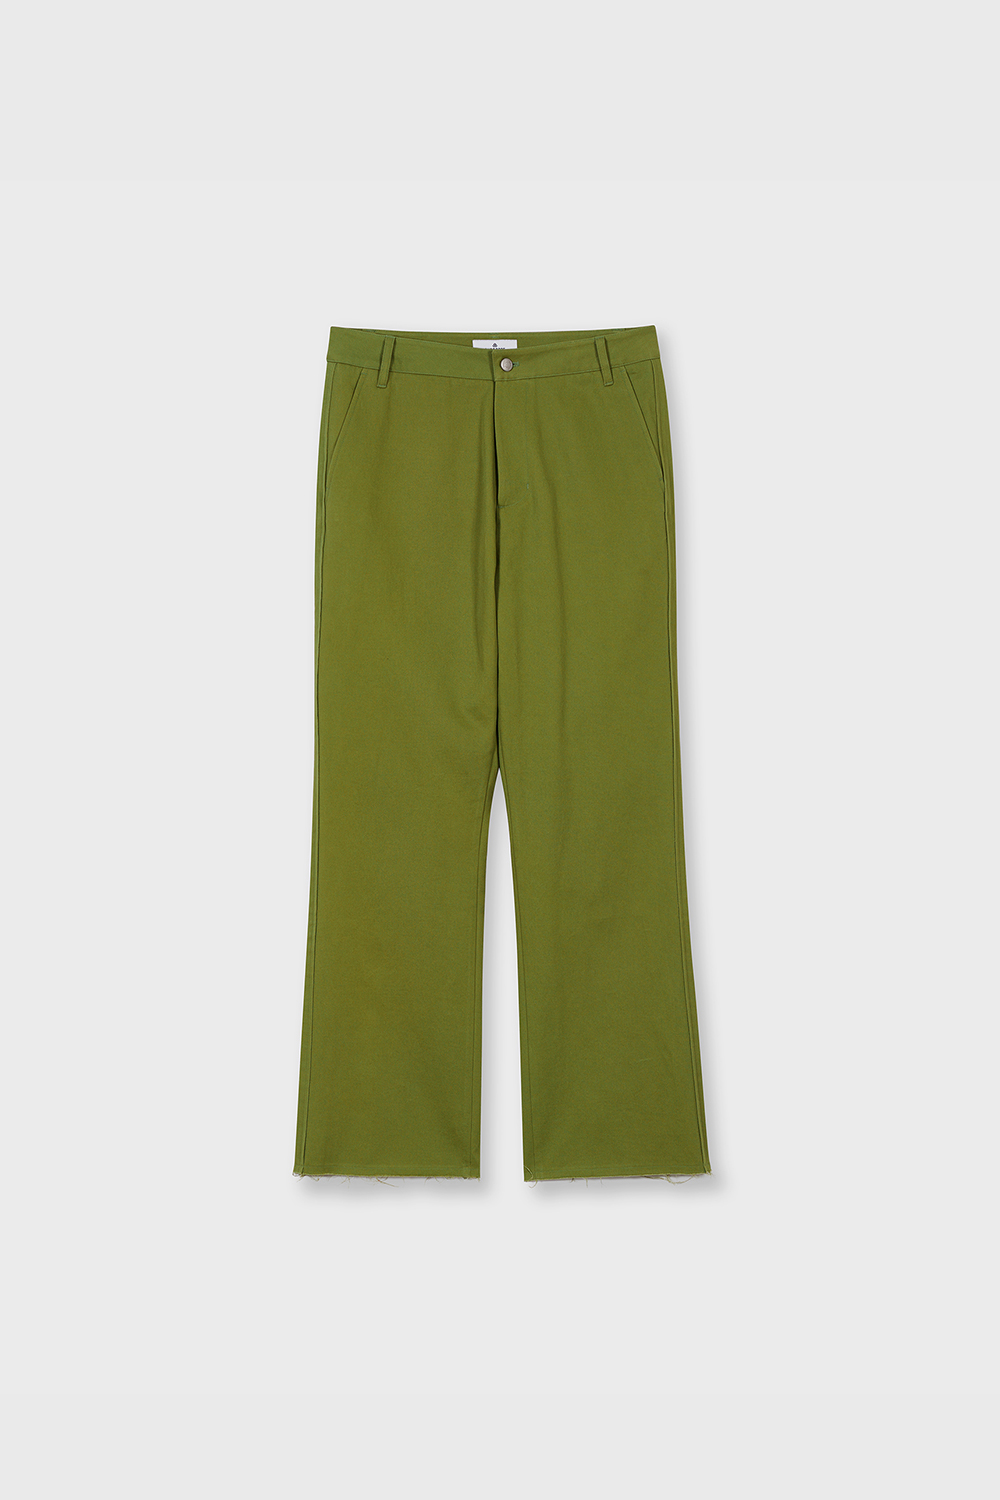 Cut Off Bootcut Pants (Lime Green)